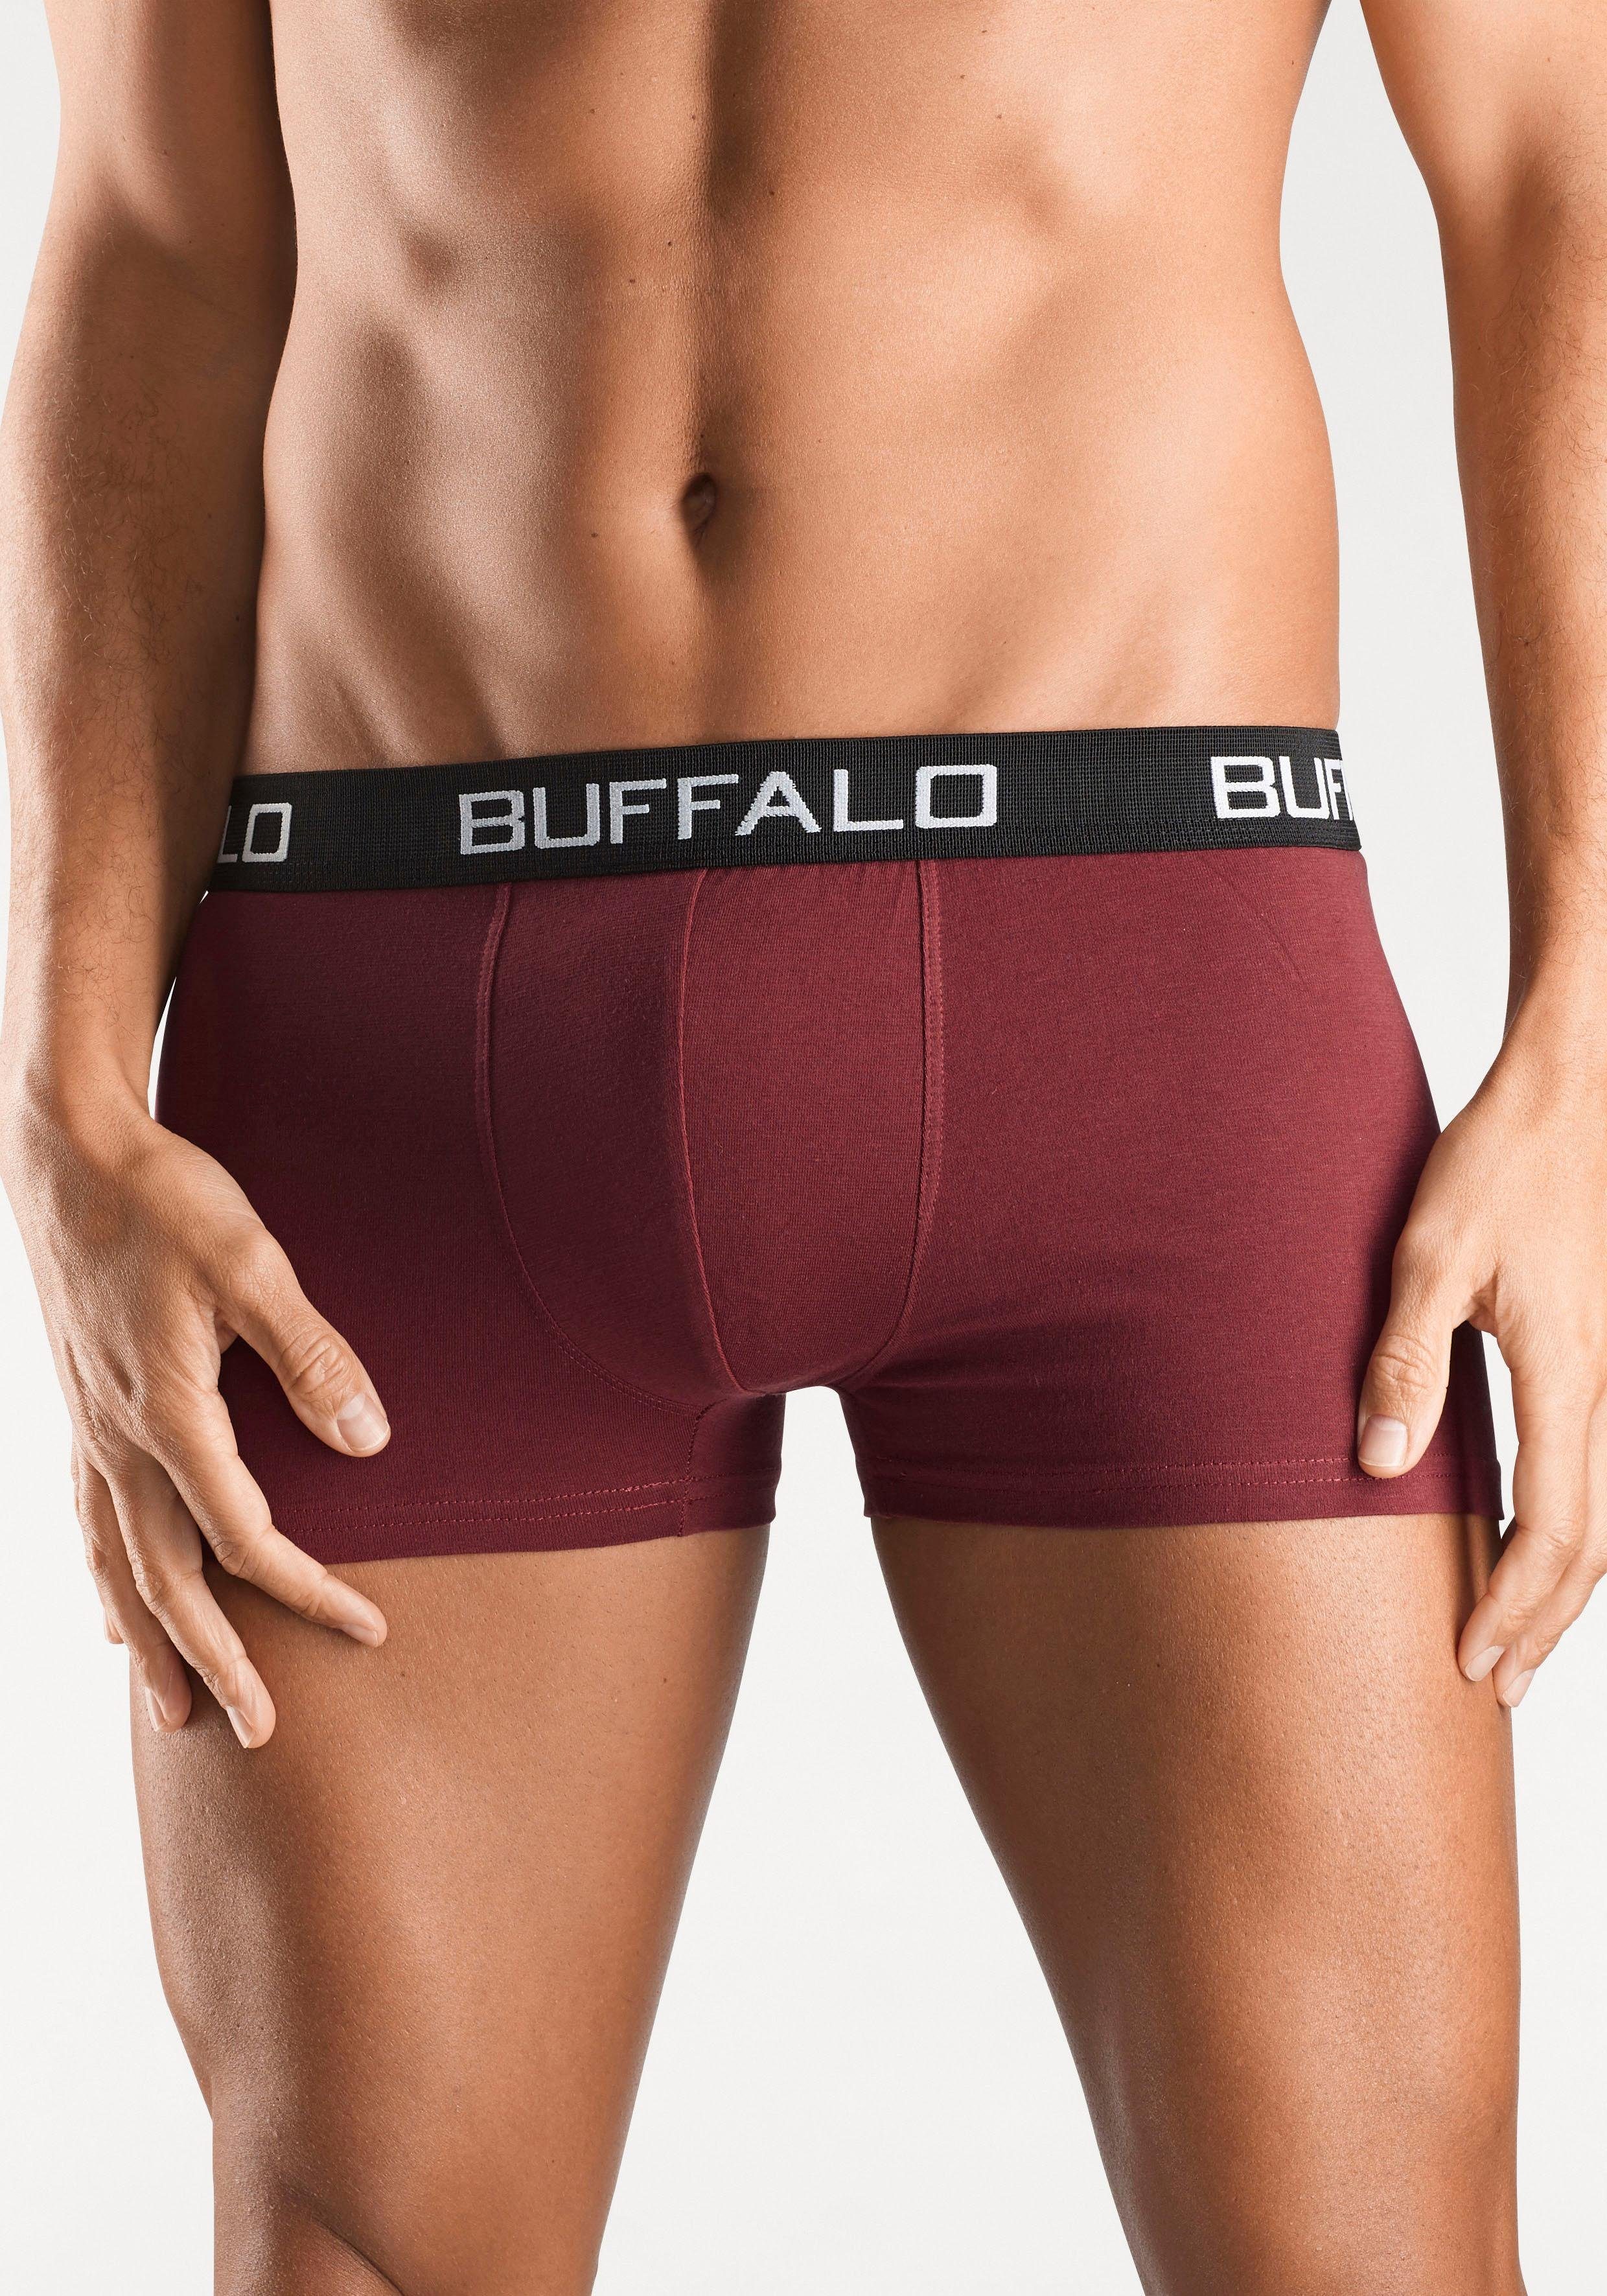 Wäsche/Bademode Boxershorts Buffalo Boxer (4 Stück) unifarbene Retro Pants